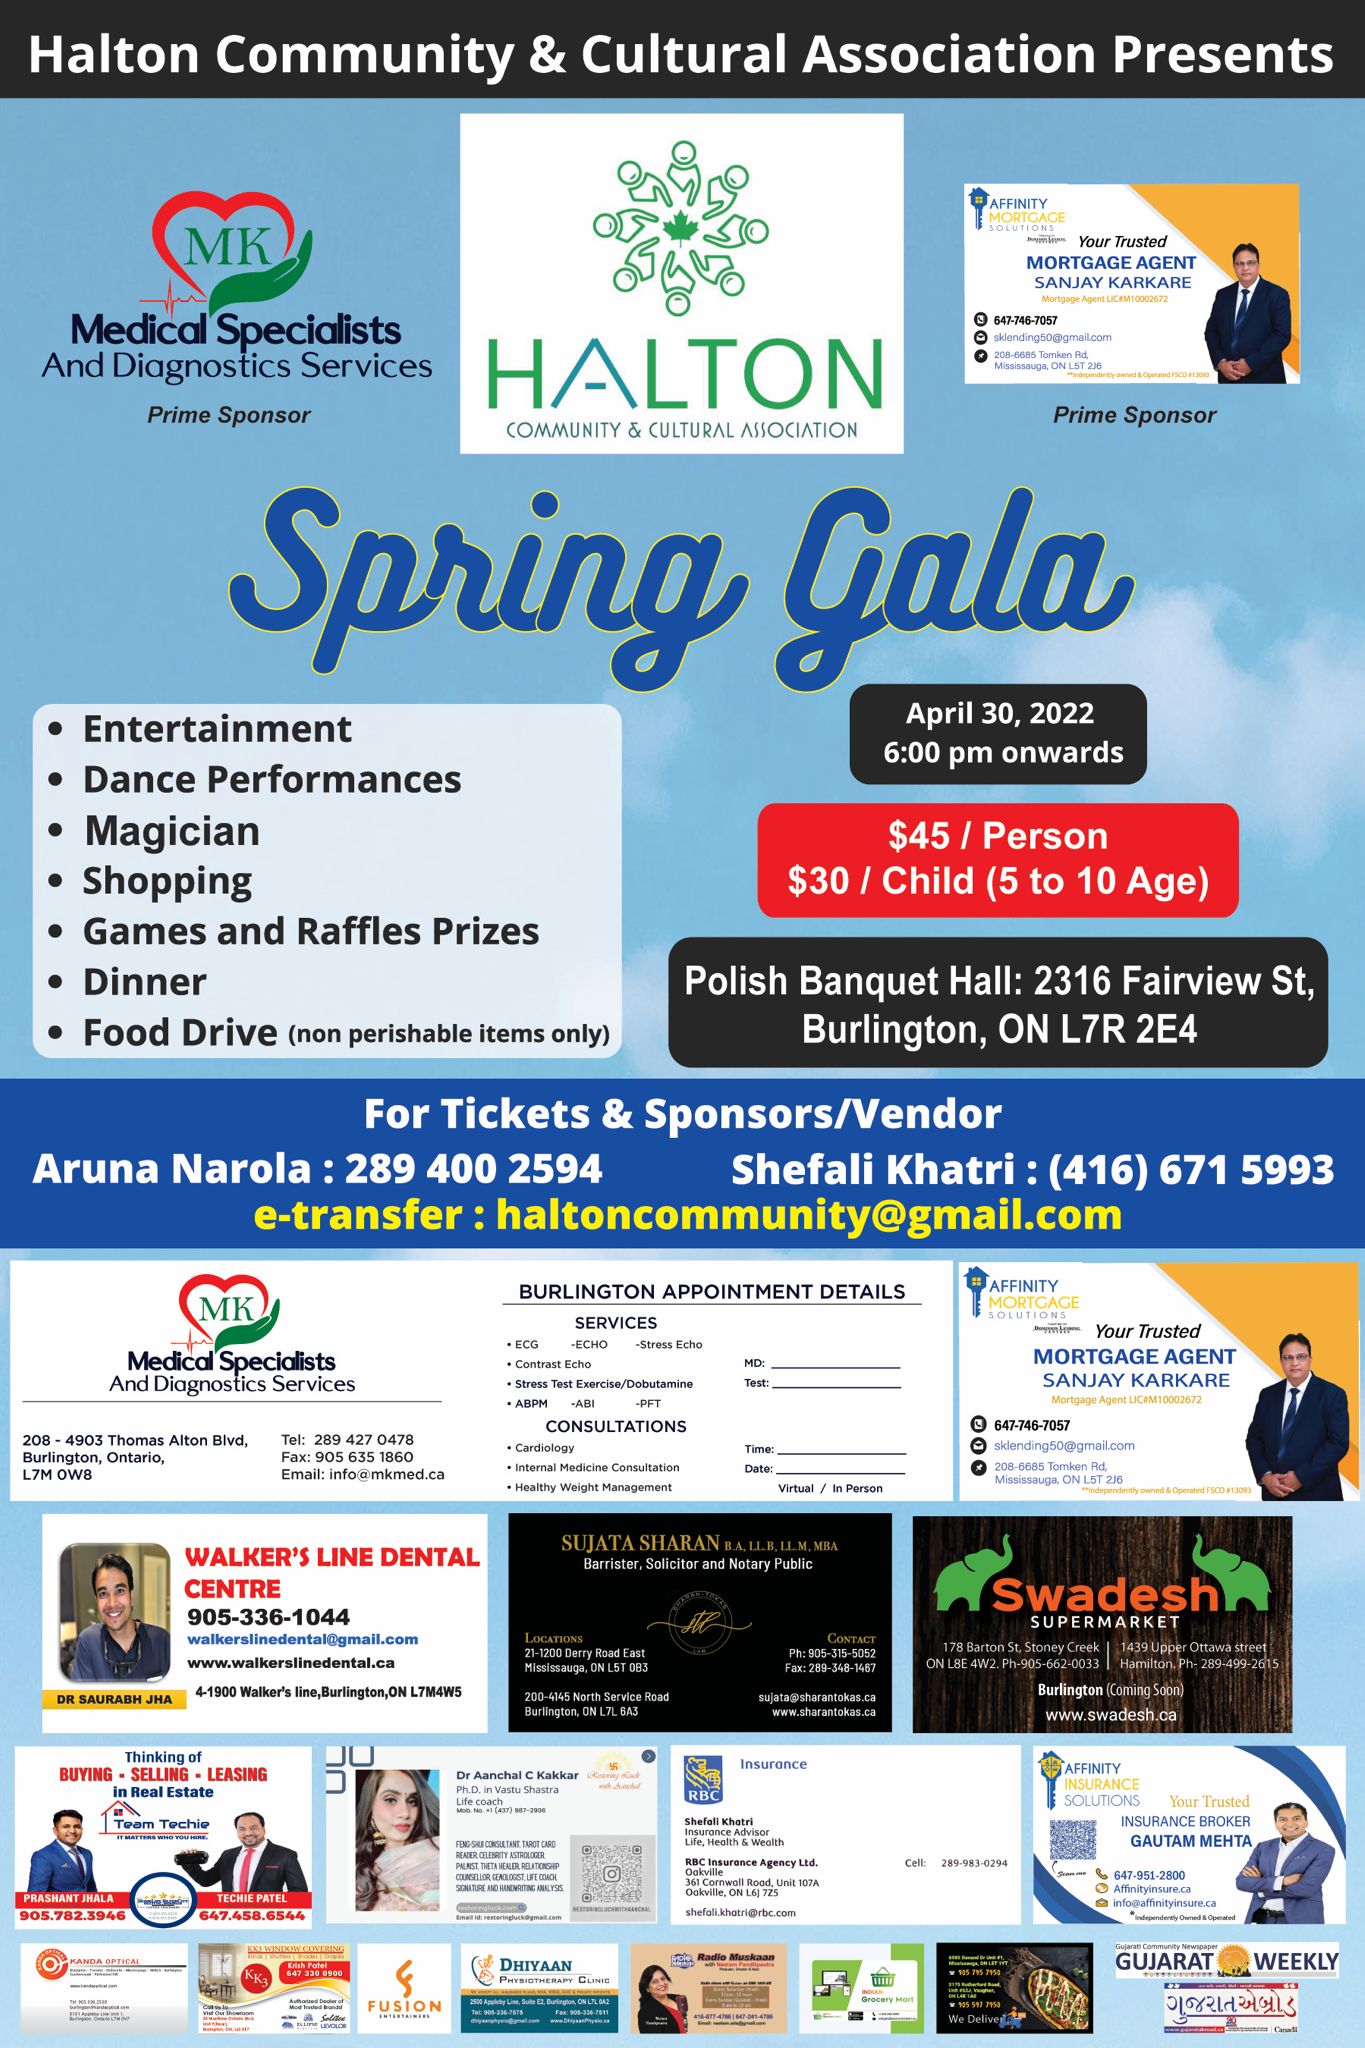 spring gala event